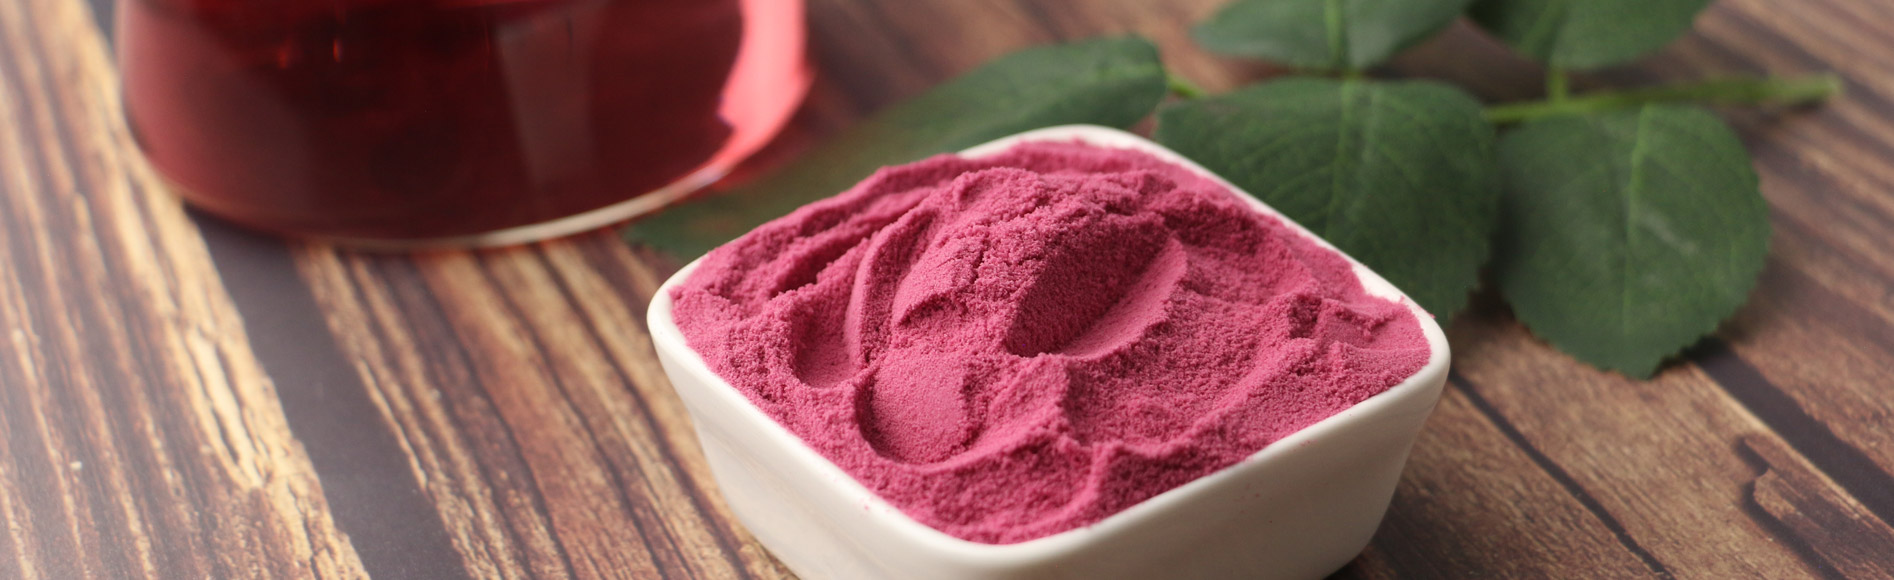 FruiVeg® 弗瑞威格 速溶蓝莓粉 能够较好的保留原材料的风味